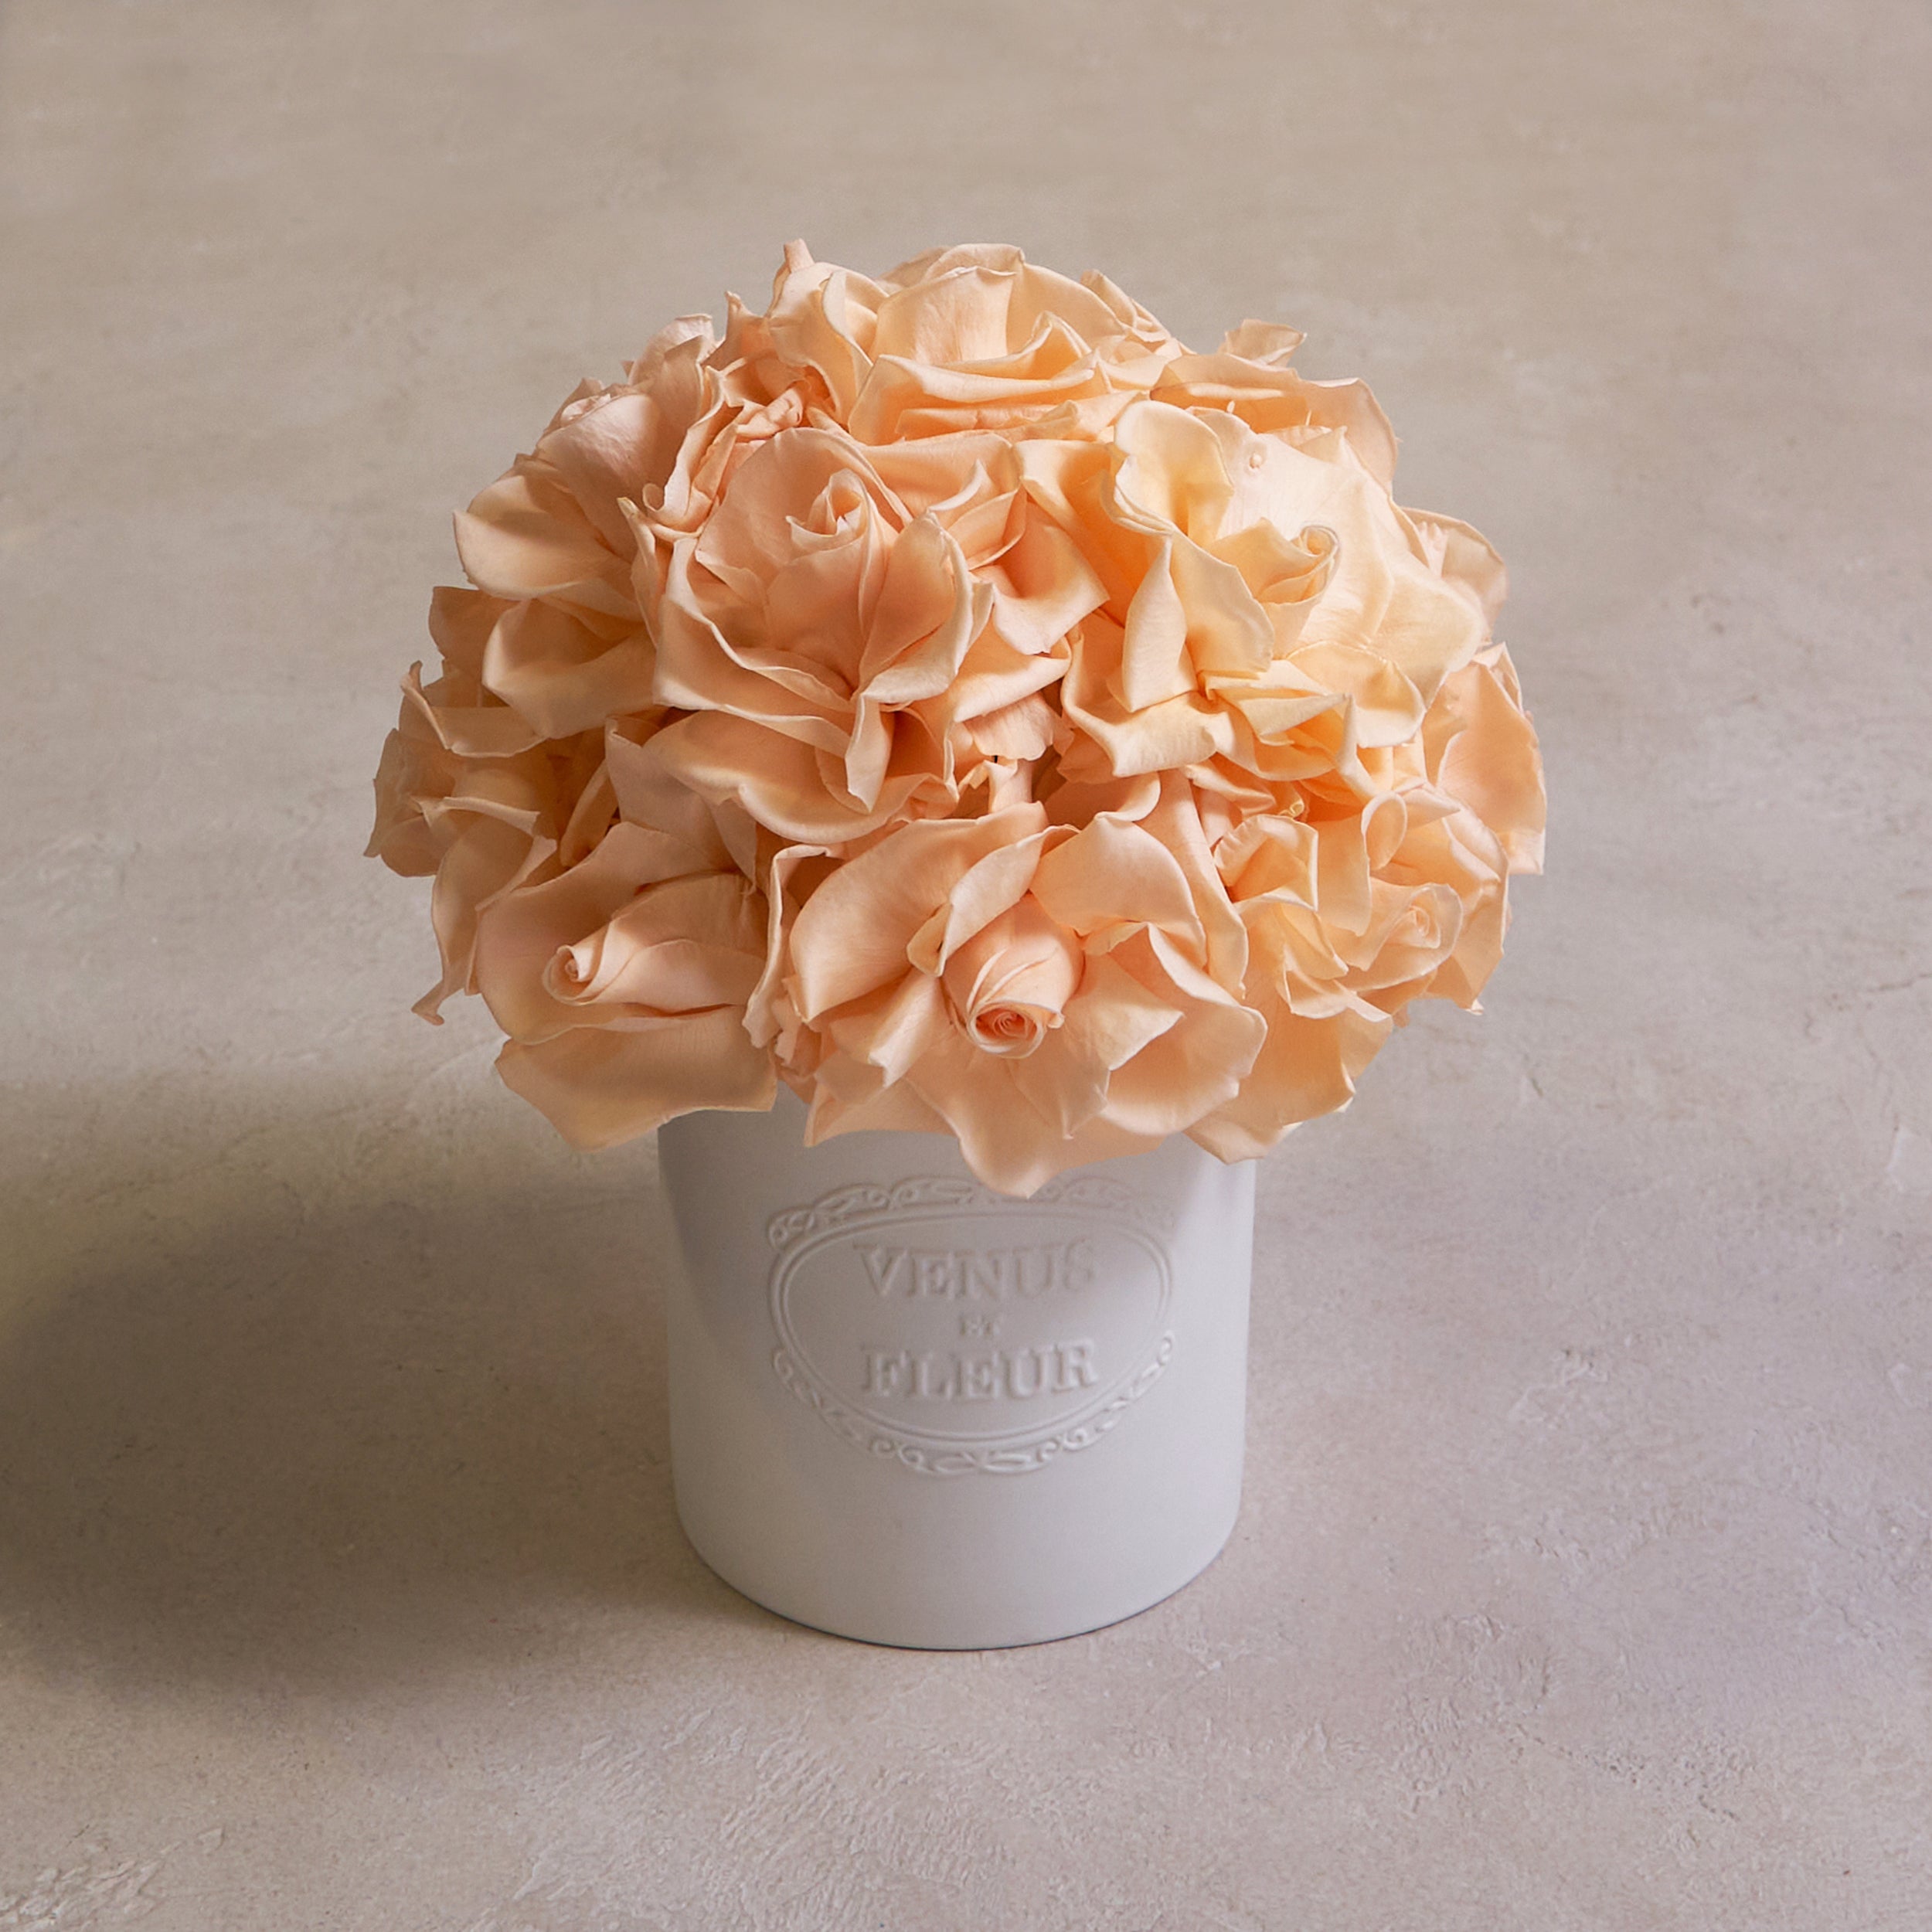 Papaya Reflexed Roses in White Fleura Porcelain Vase by Venus et Fleur